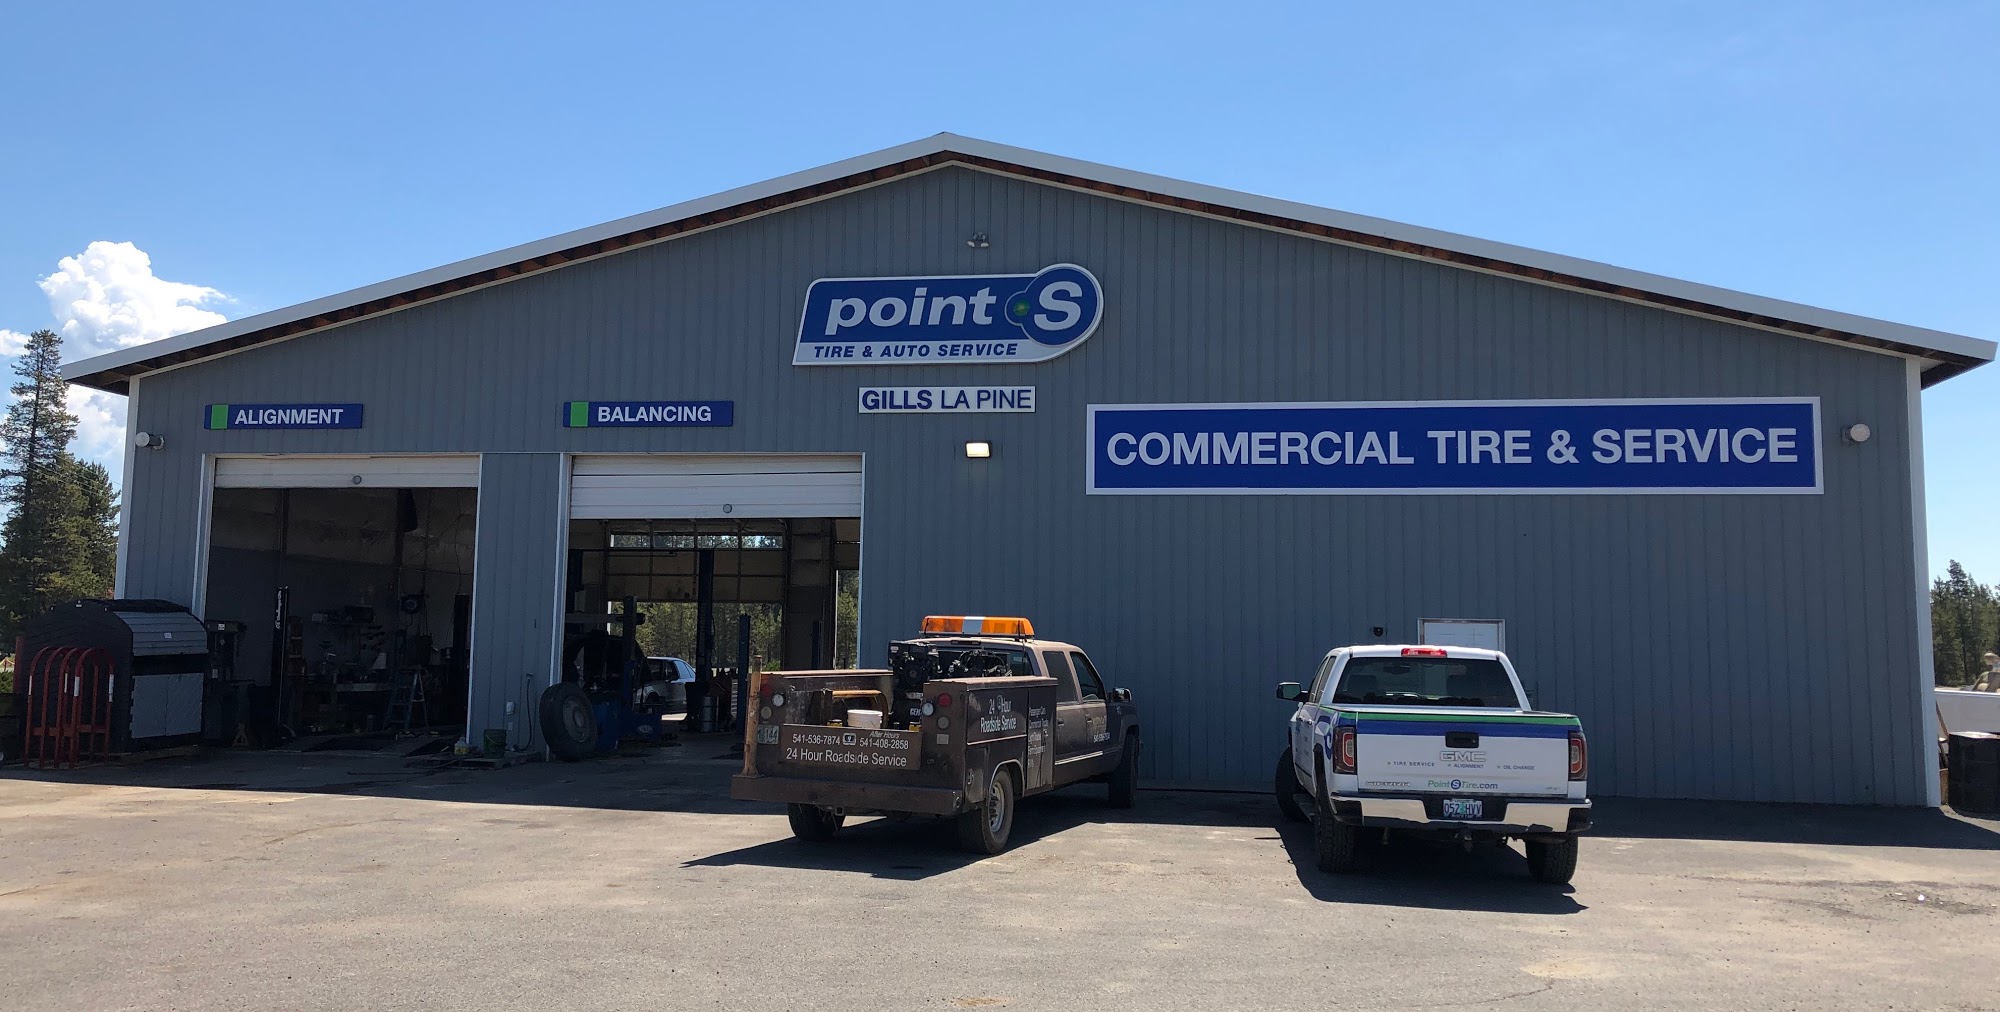 Gills Point S Tire & Auto - La Pine